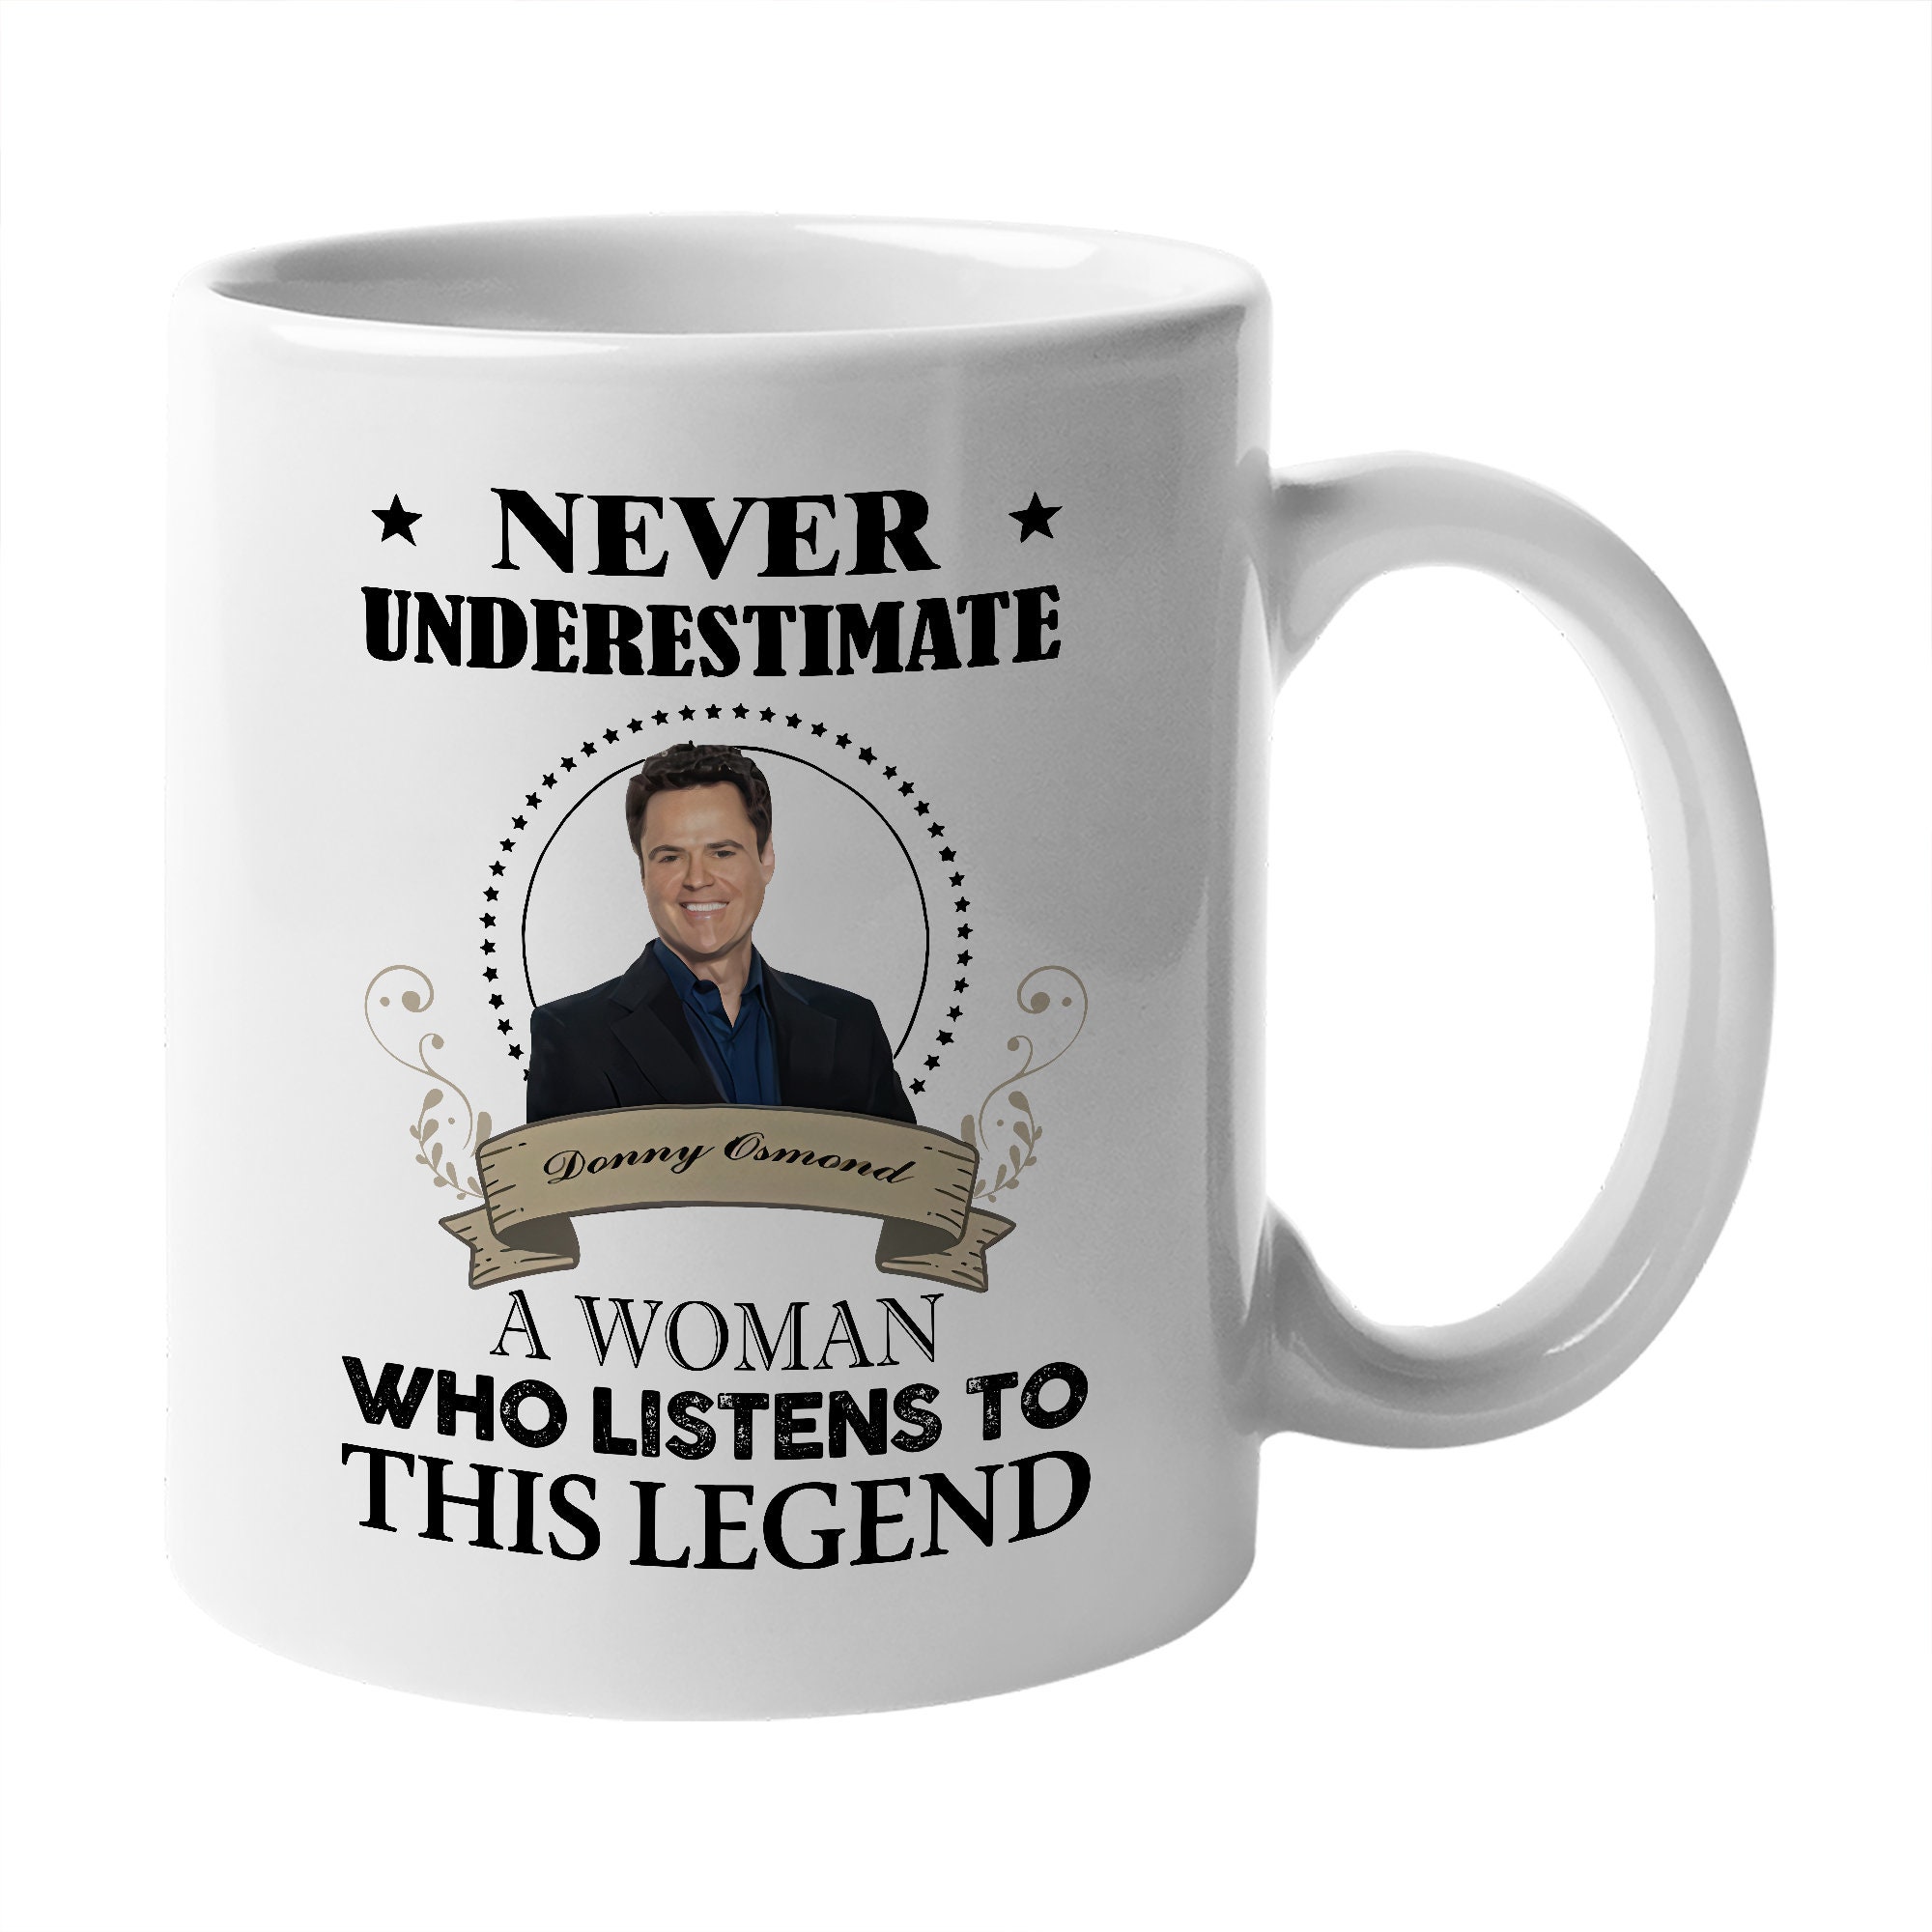 Discover Funny Donny Osmond Mug Woman Listen This Legend Mug Gift For 80S 90S American Singer Lover Fans